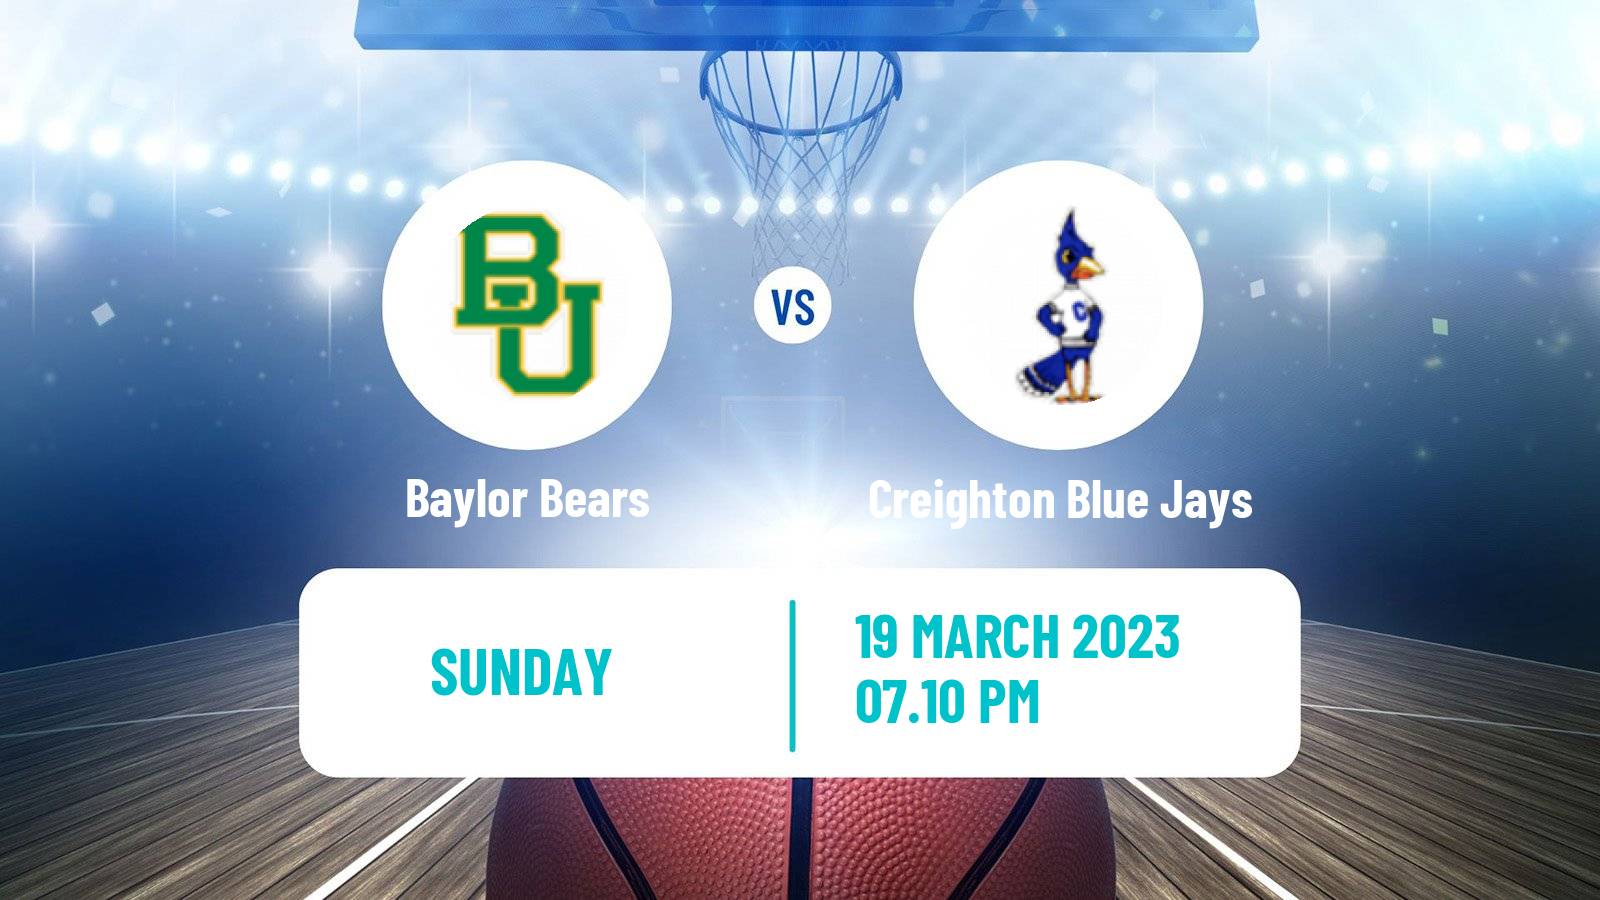 Basketball NCAA College Basketball Baylor Bears - Creighton Blue Jays